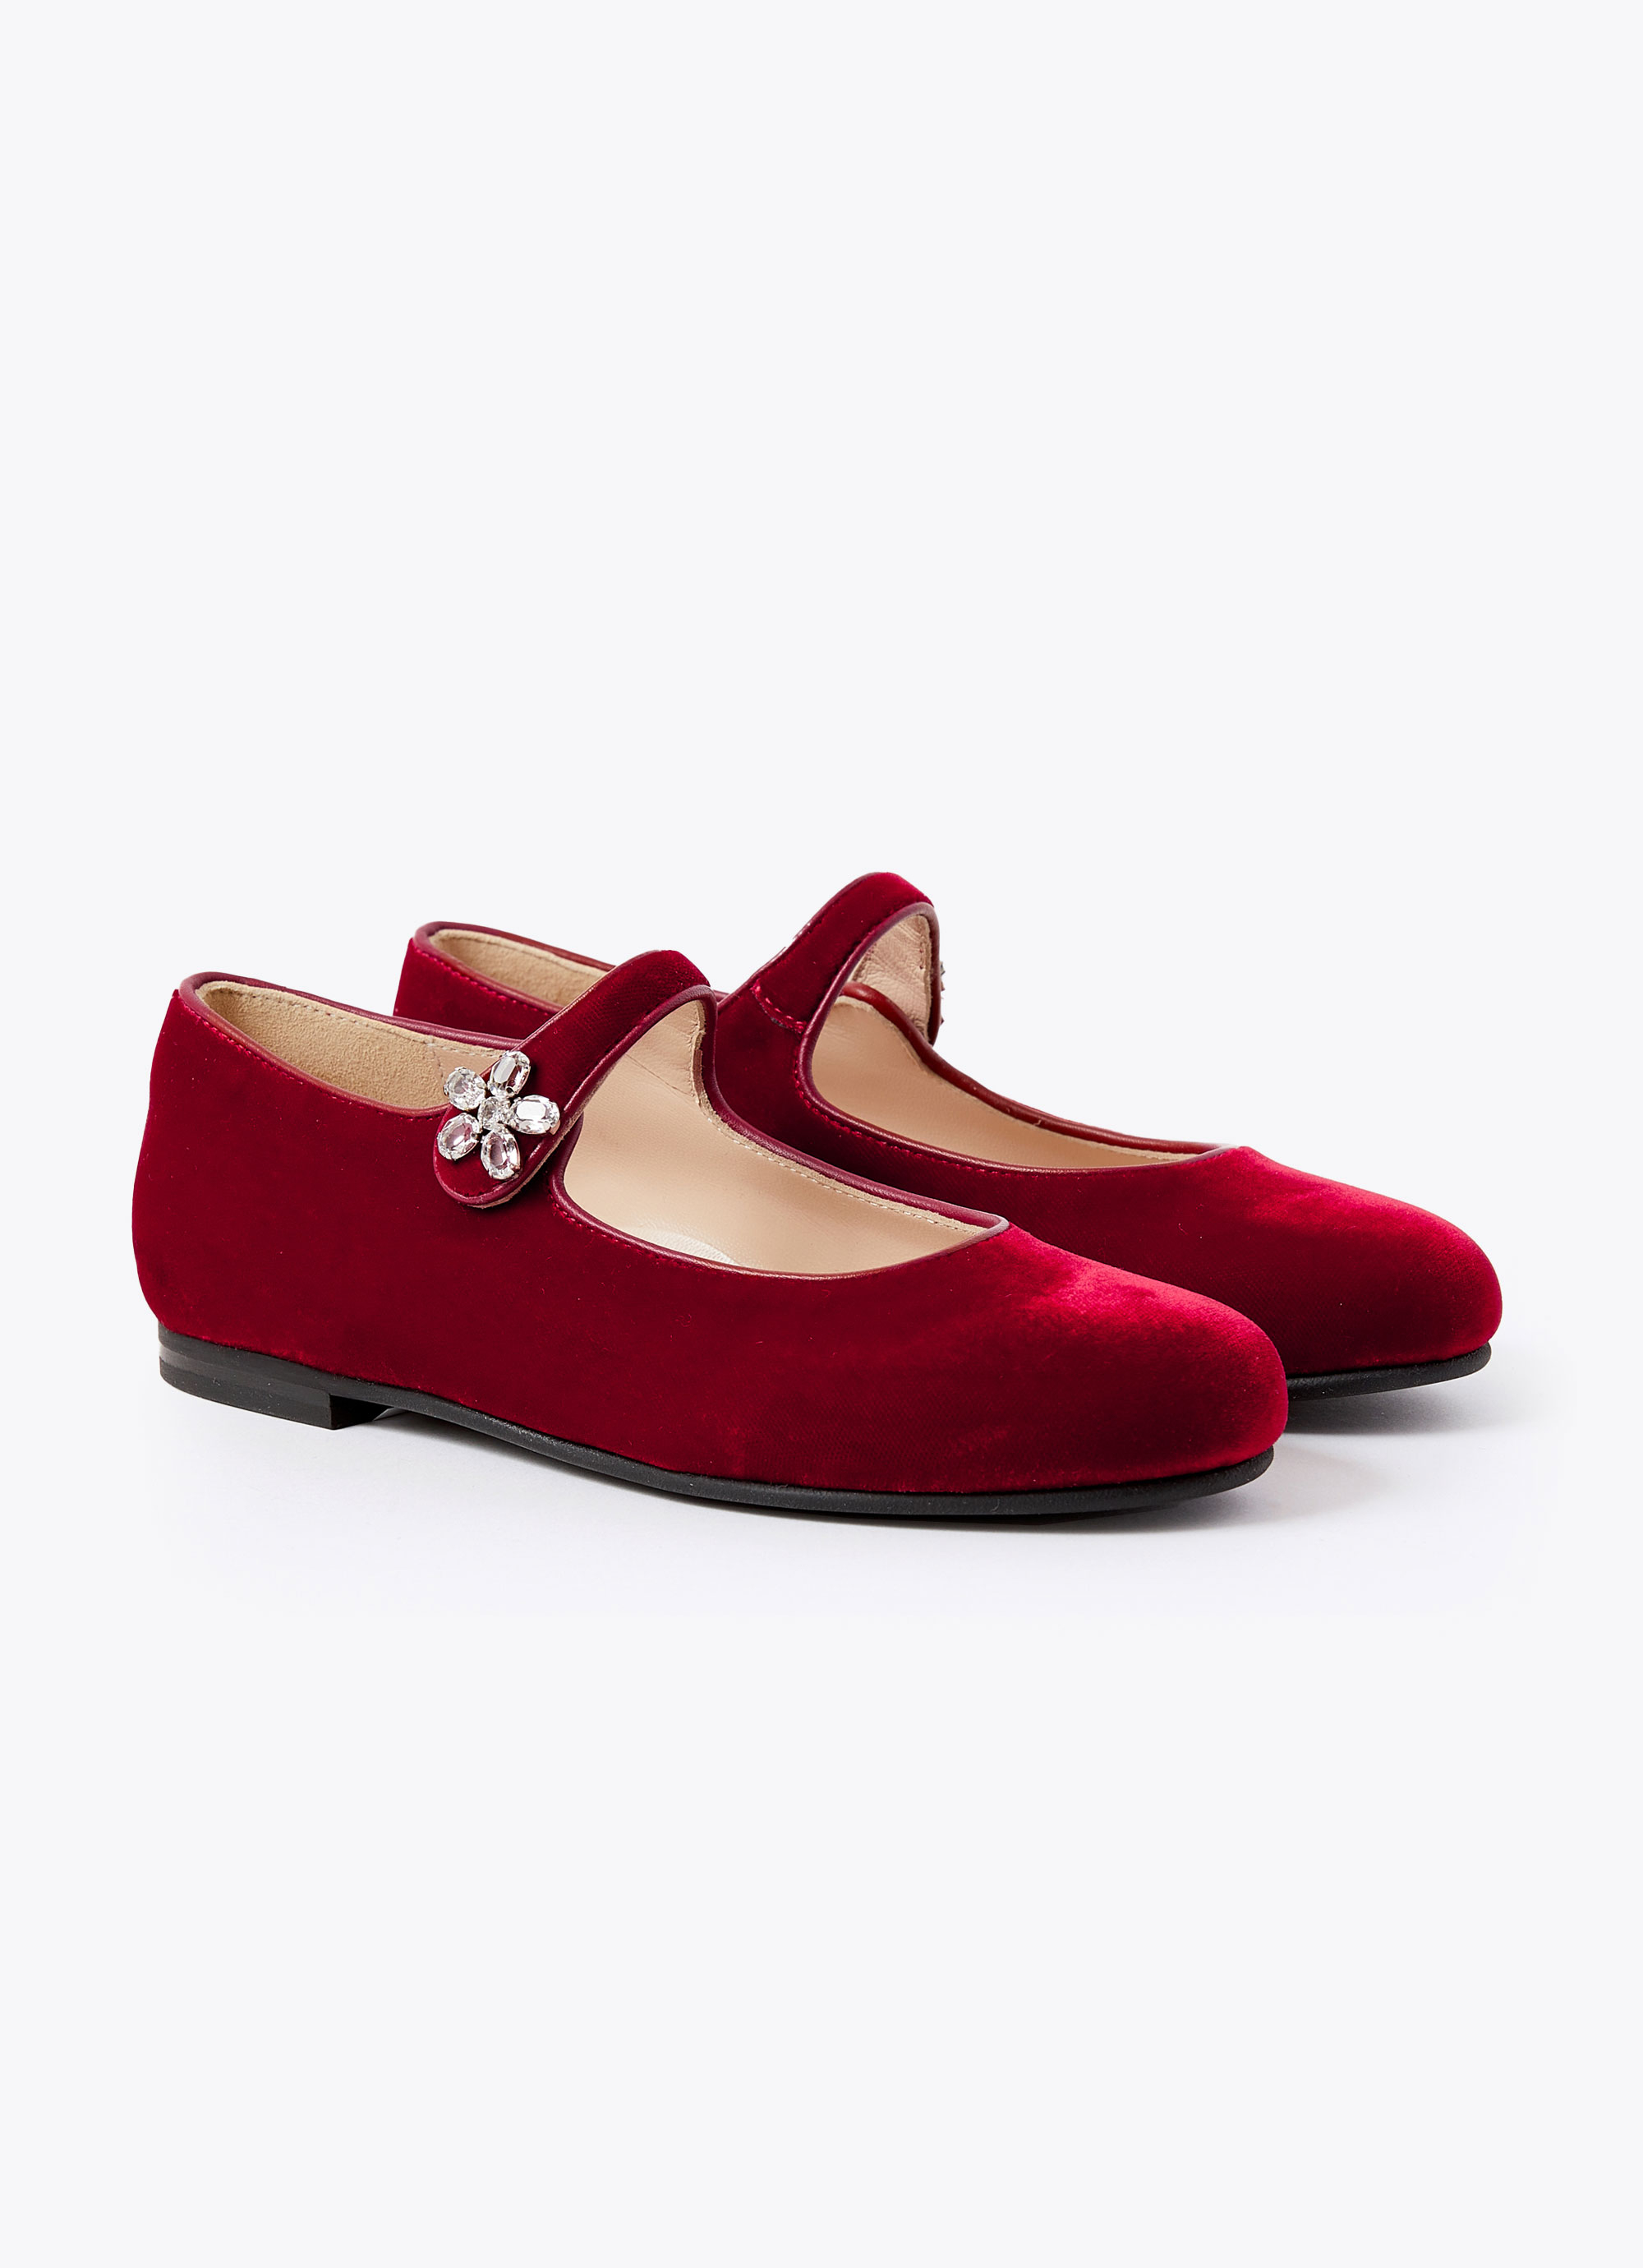 Ballerines en velours rouge avec strass - Chaussures - Il Gufo